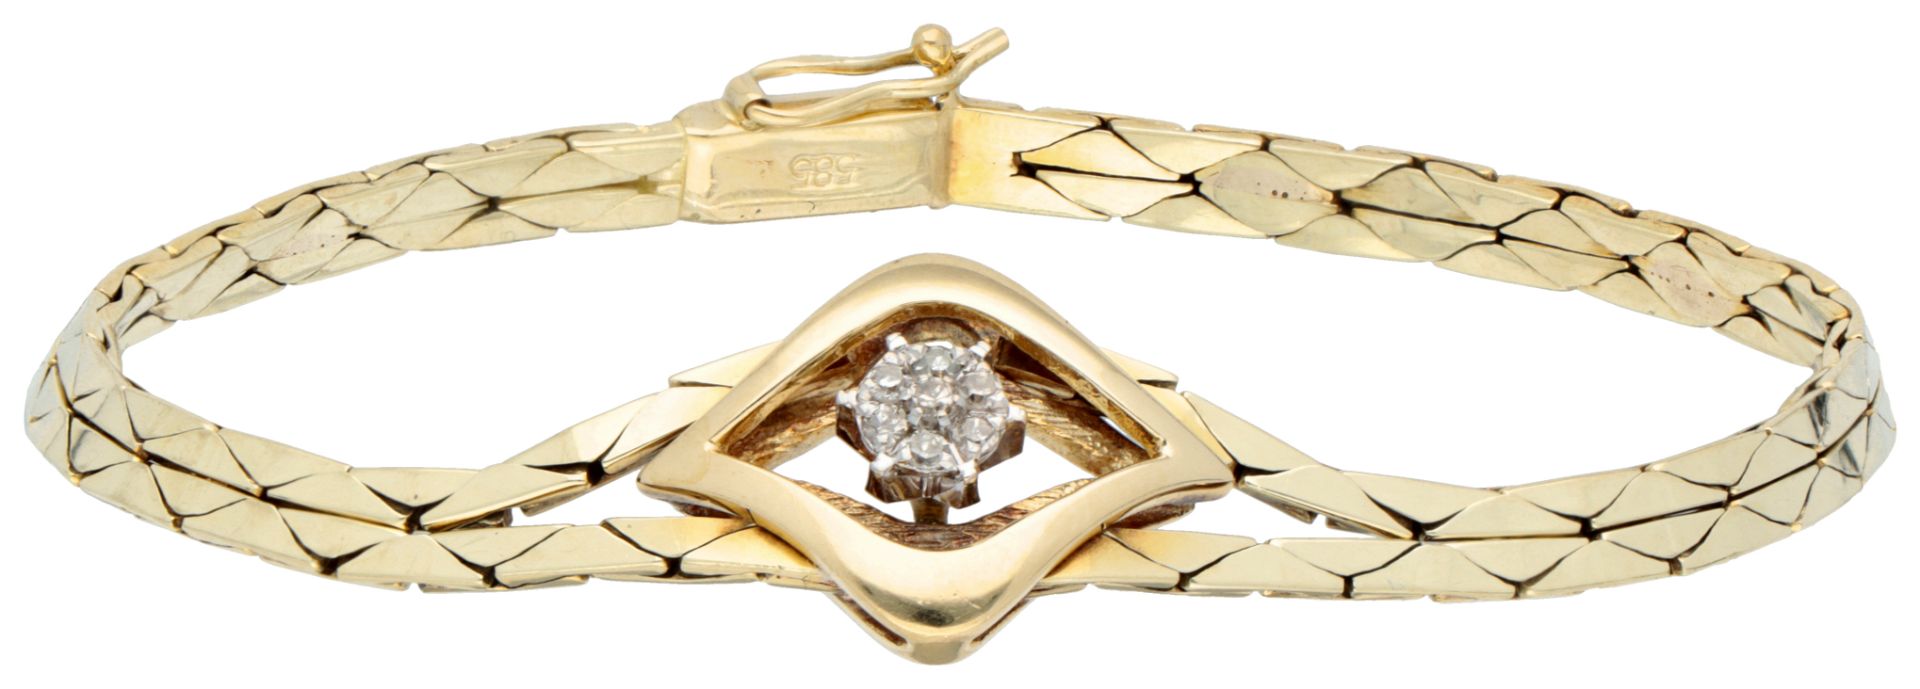 14K yellow gold flexible bracelet with diamond rosette.